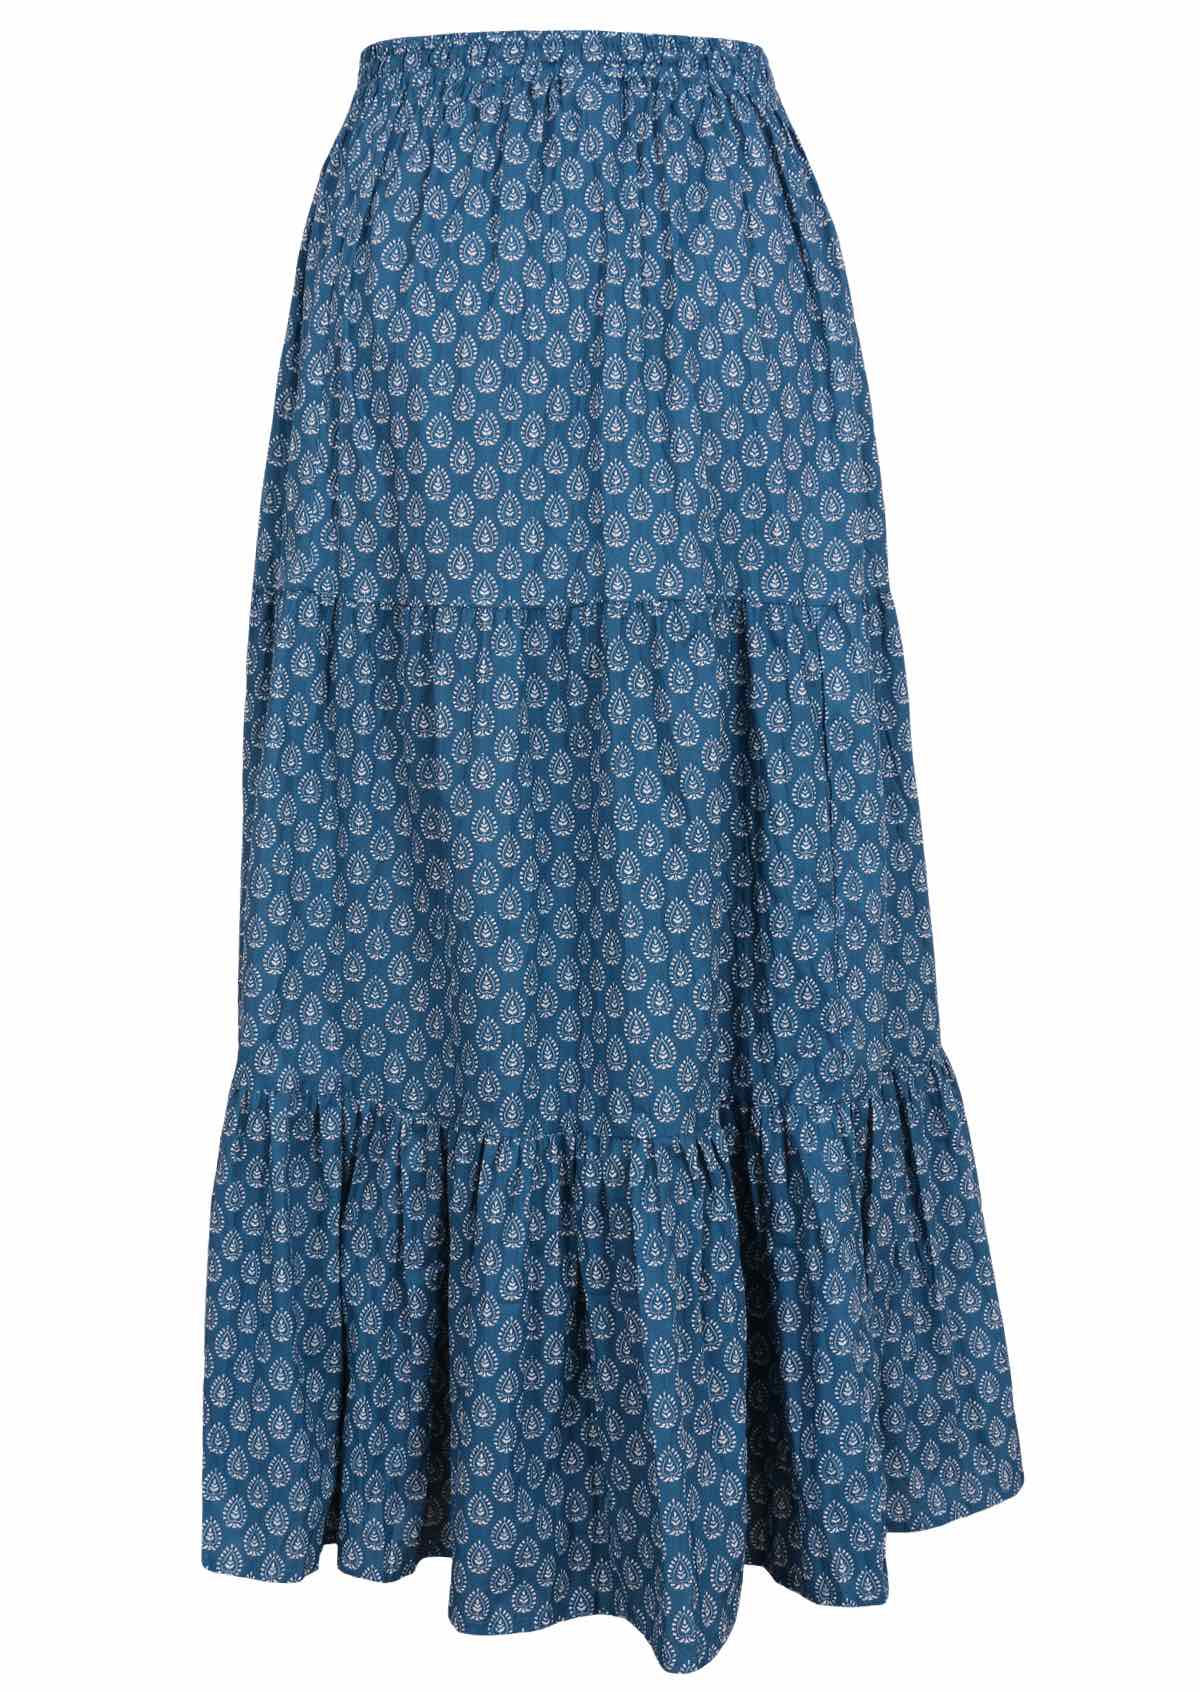 White pendant print on blue base cotton maxi skirt